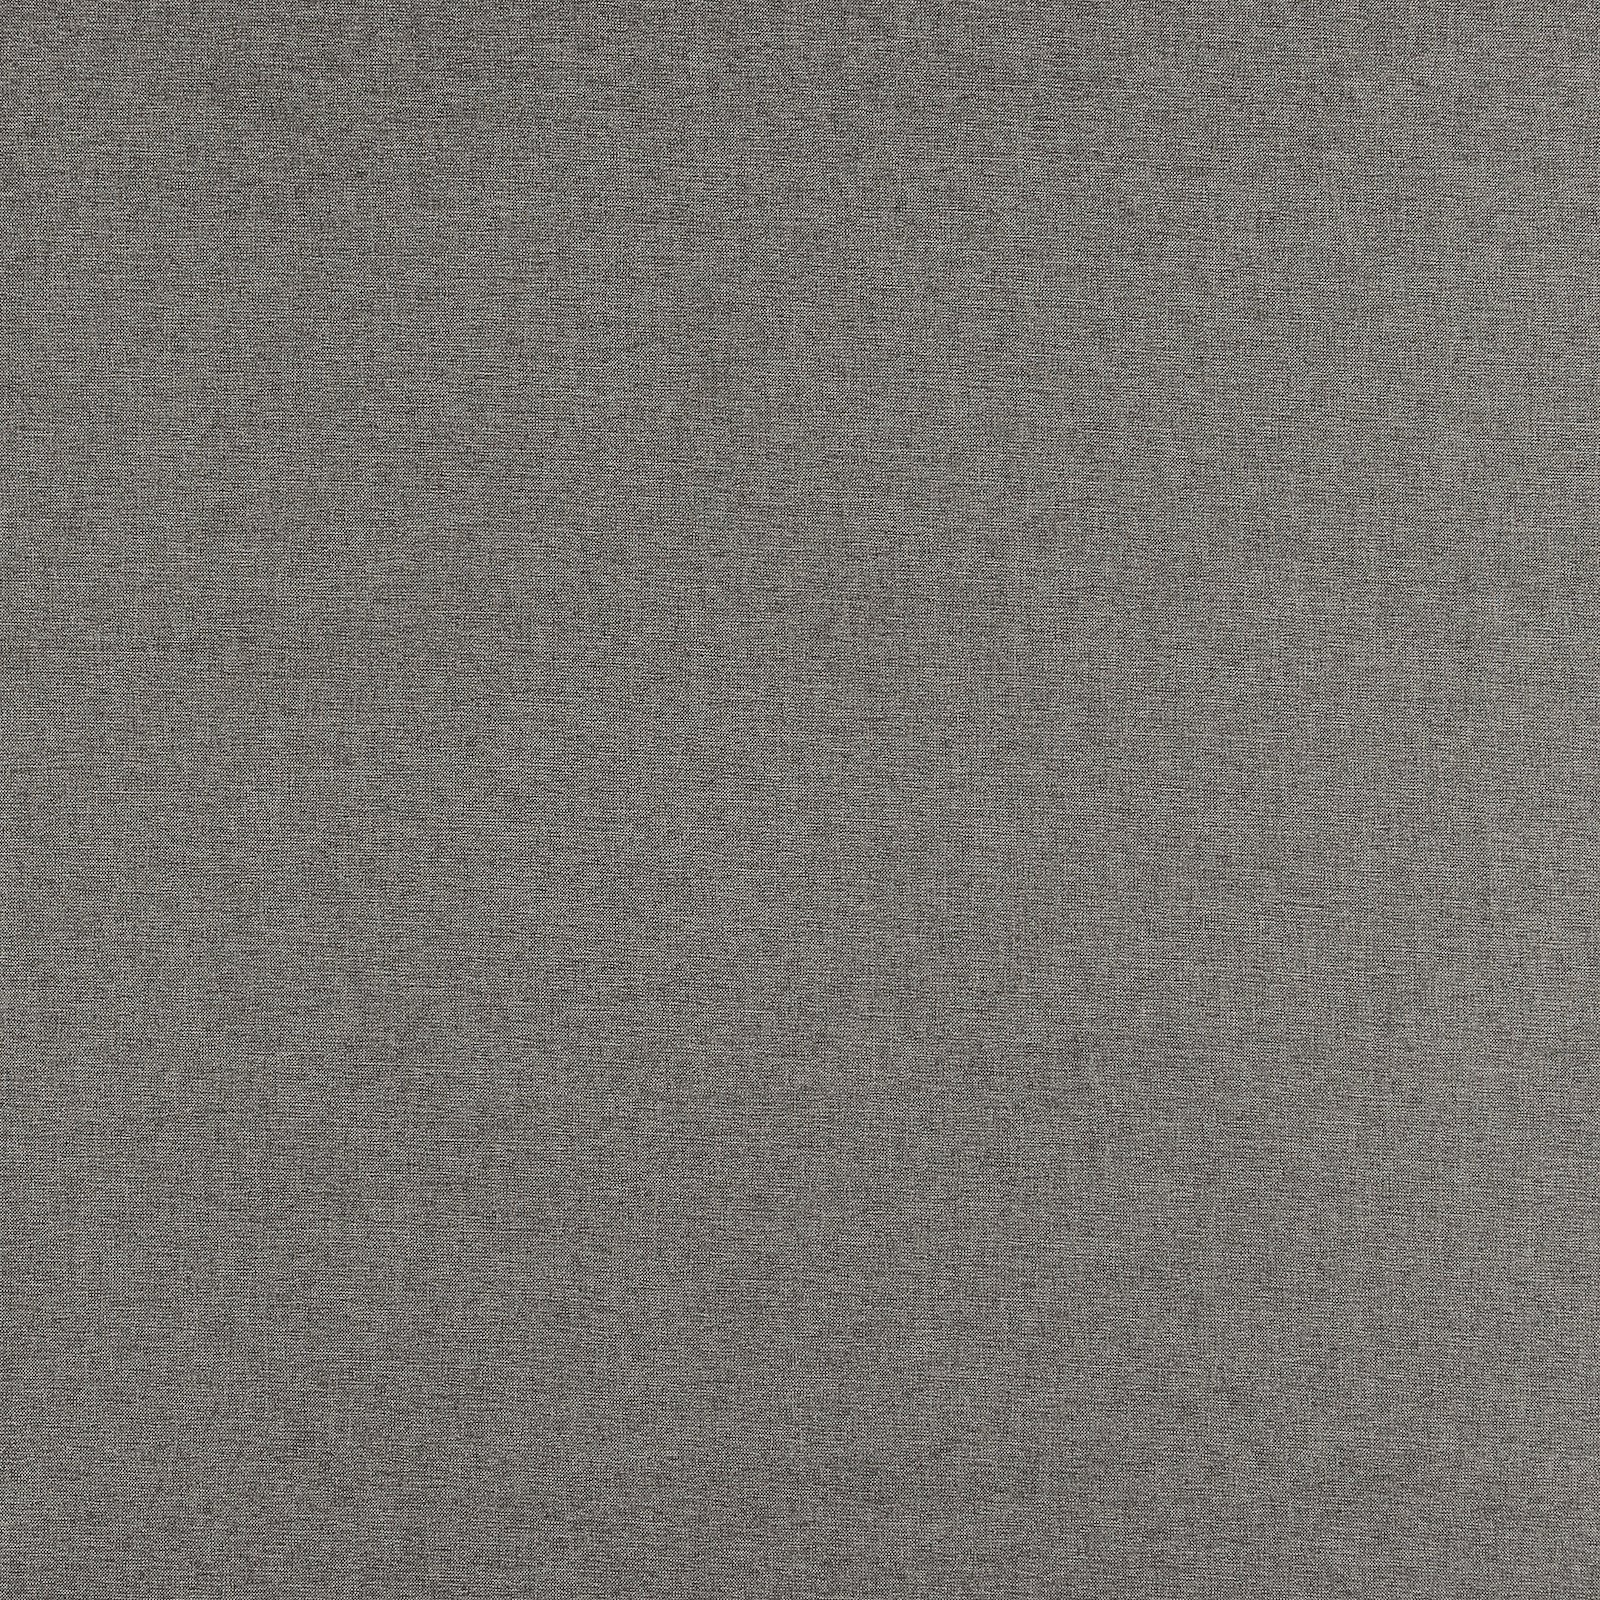 Upholstery texture grey/light grey